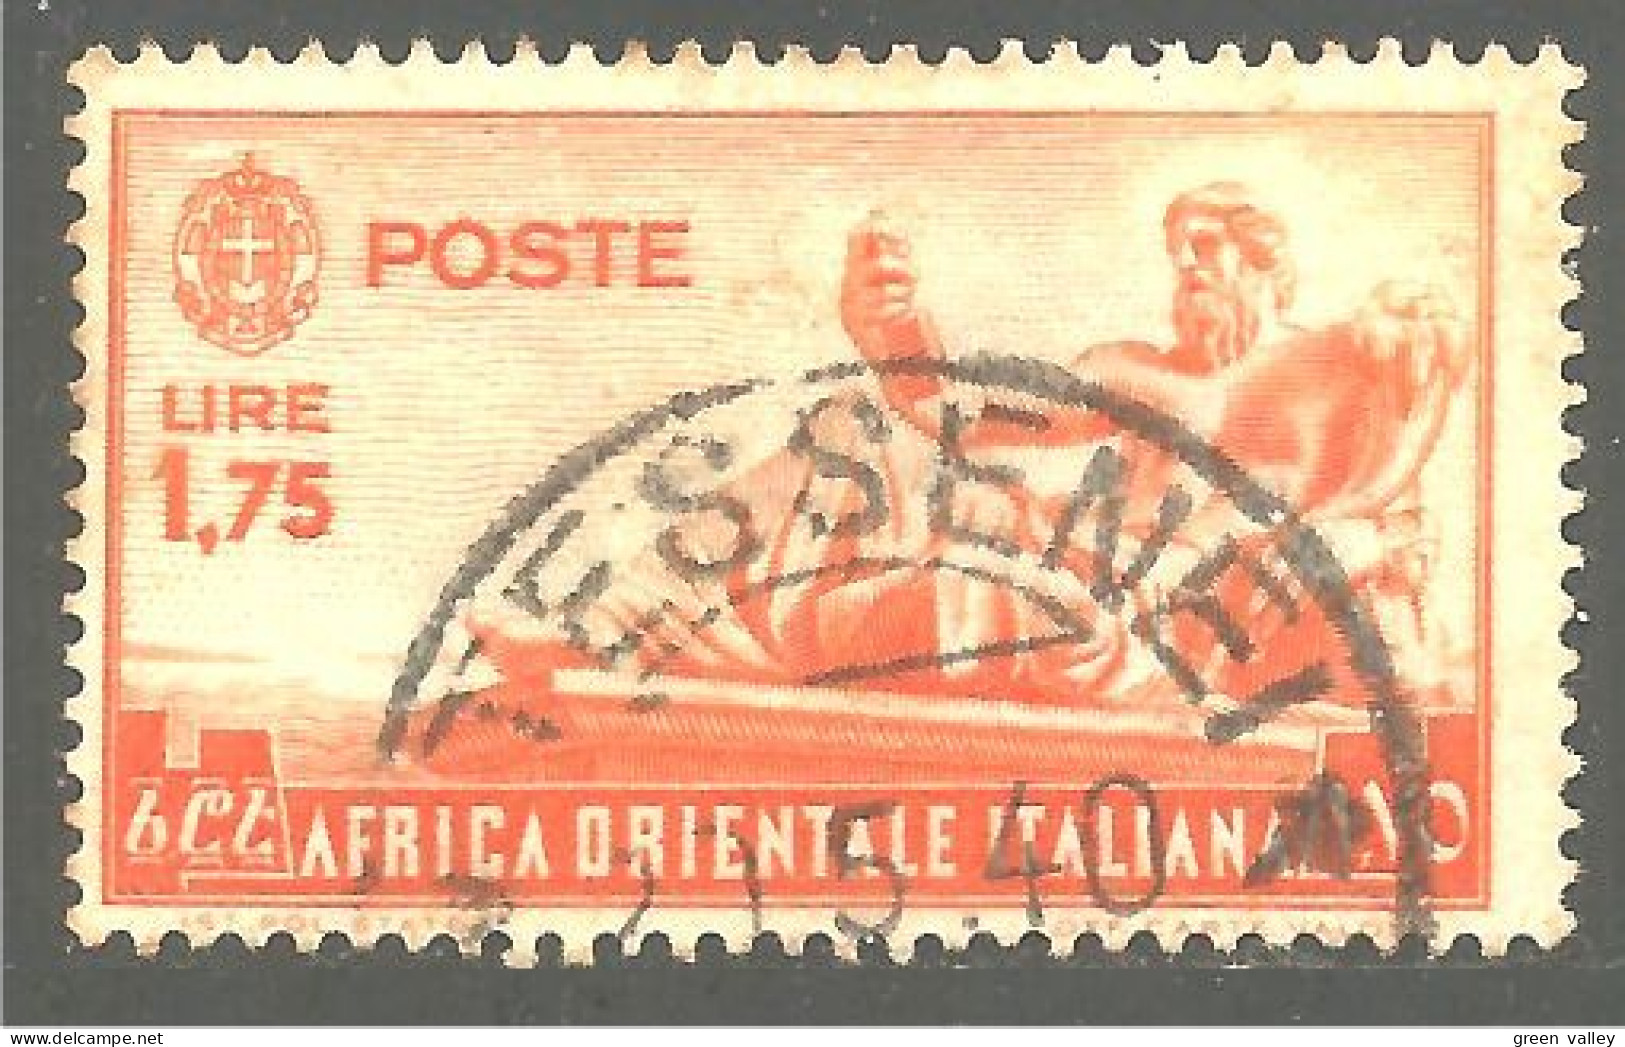 521 Africa Orientale Italiana 1938 Statue Nil Nile (ITC-151a) - Afrique Orientale Italienne